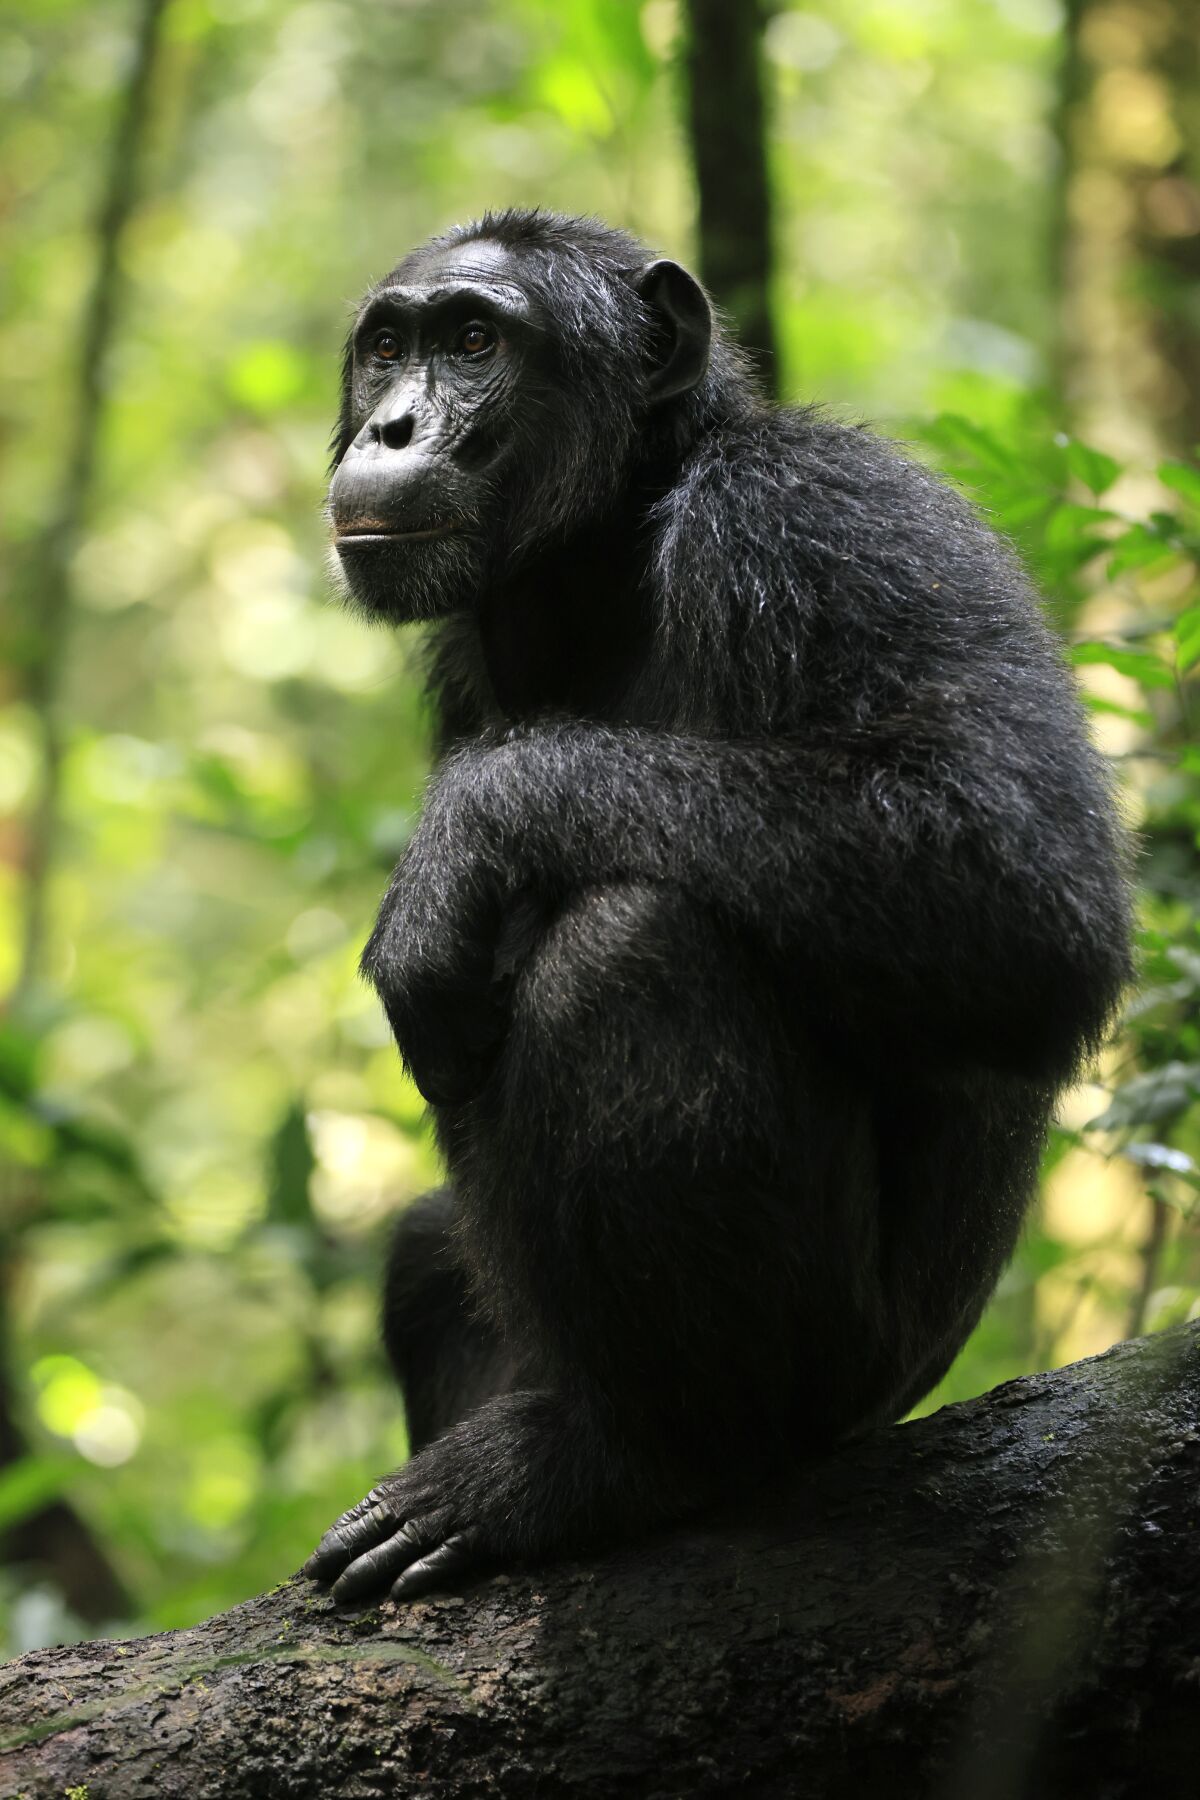 A chimpanzee poised on a tree limb